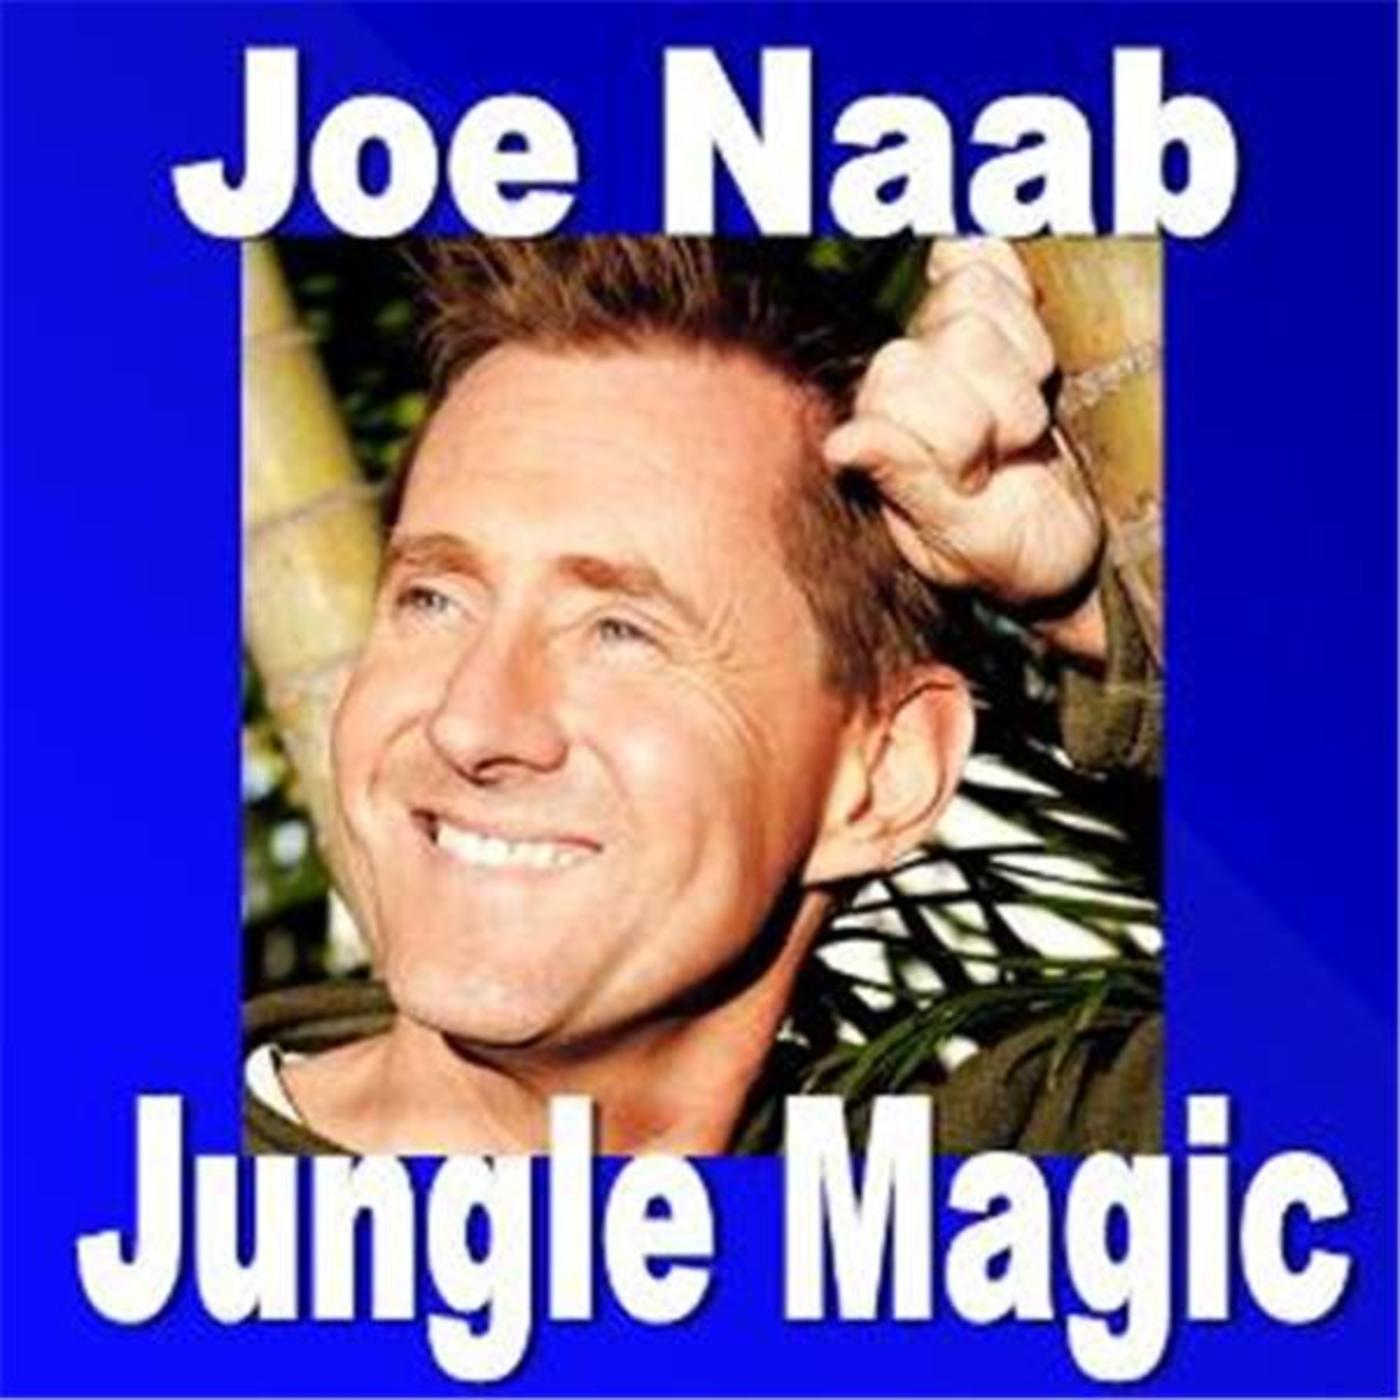 Jungle Magic with Joe Naab